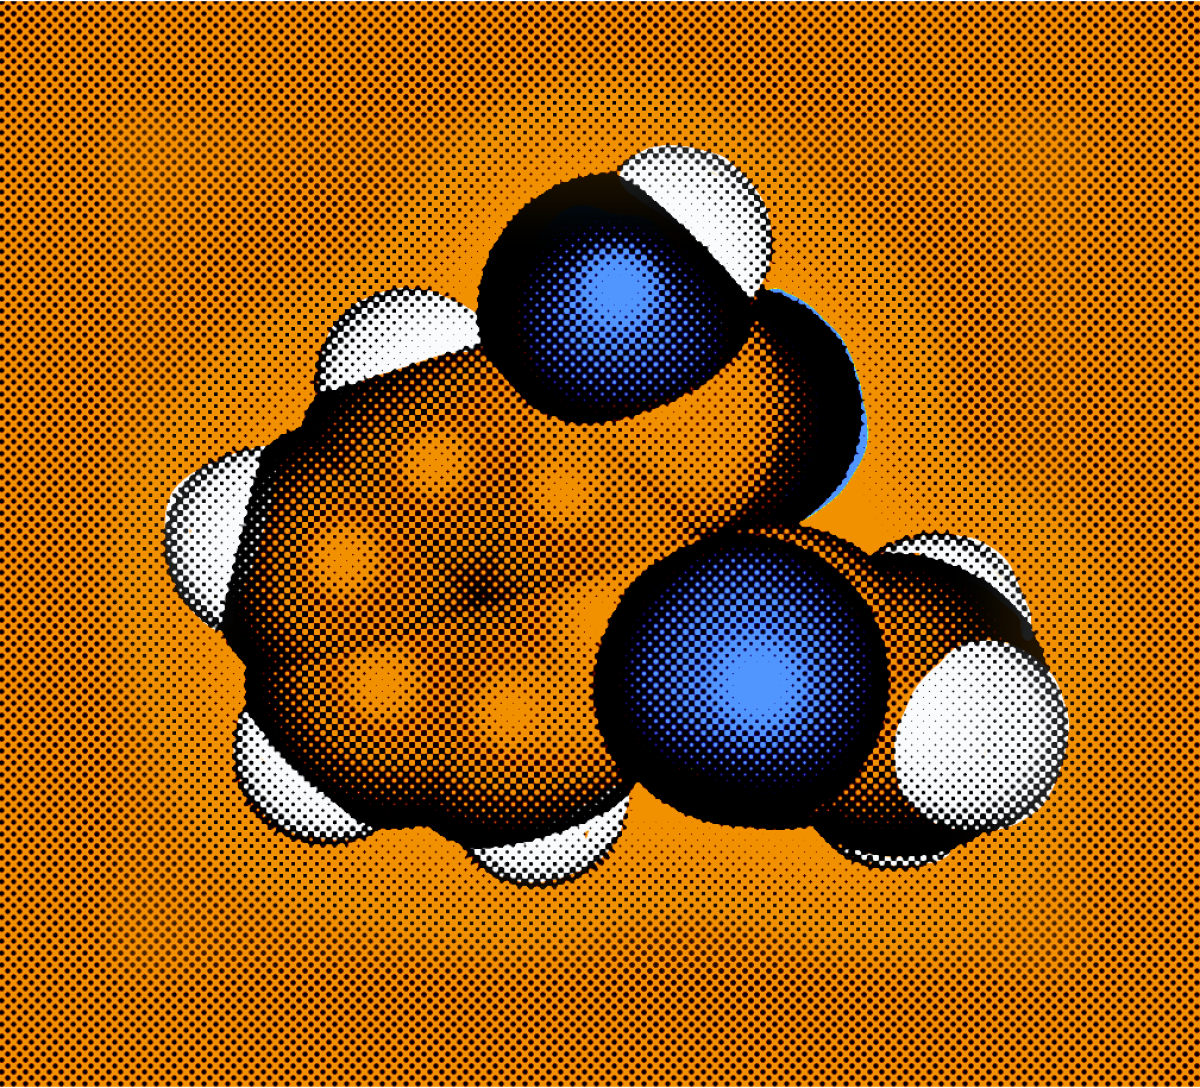 Drew Provan molecules art aspirin